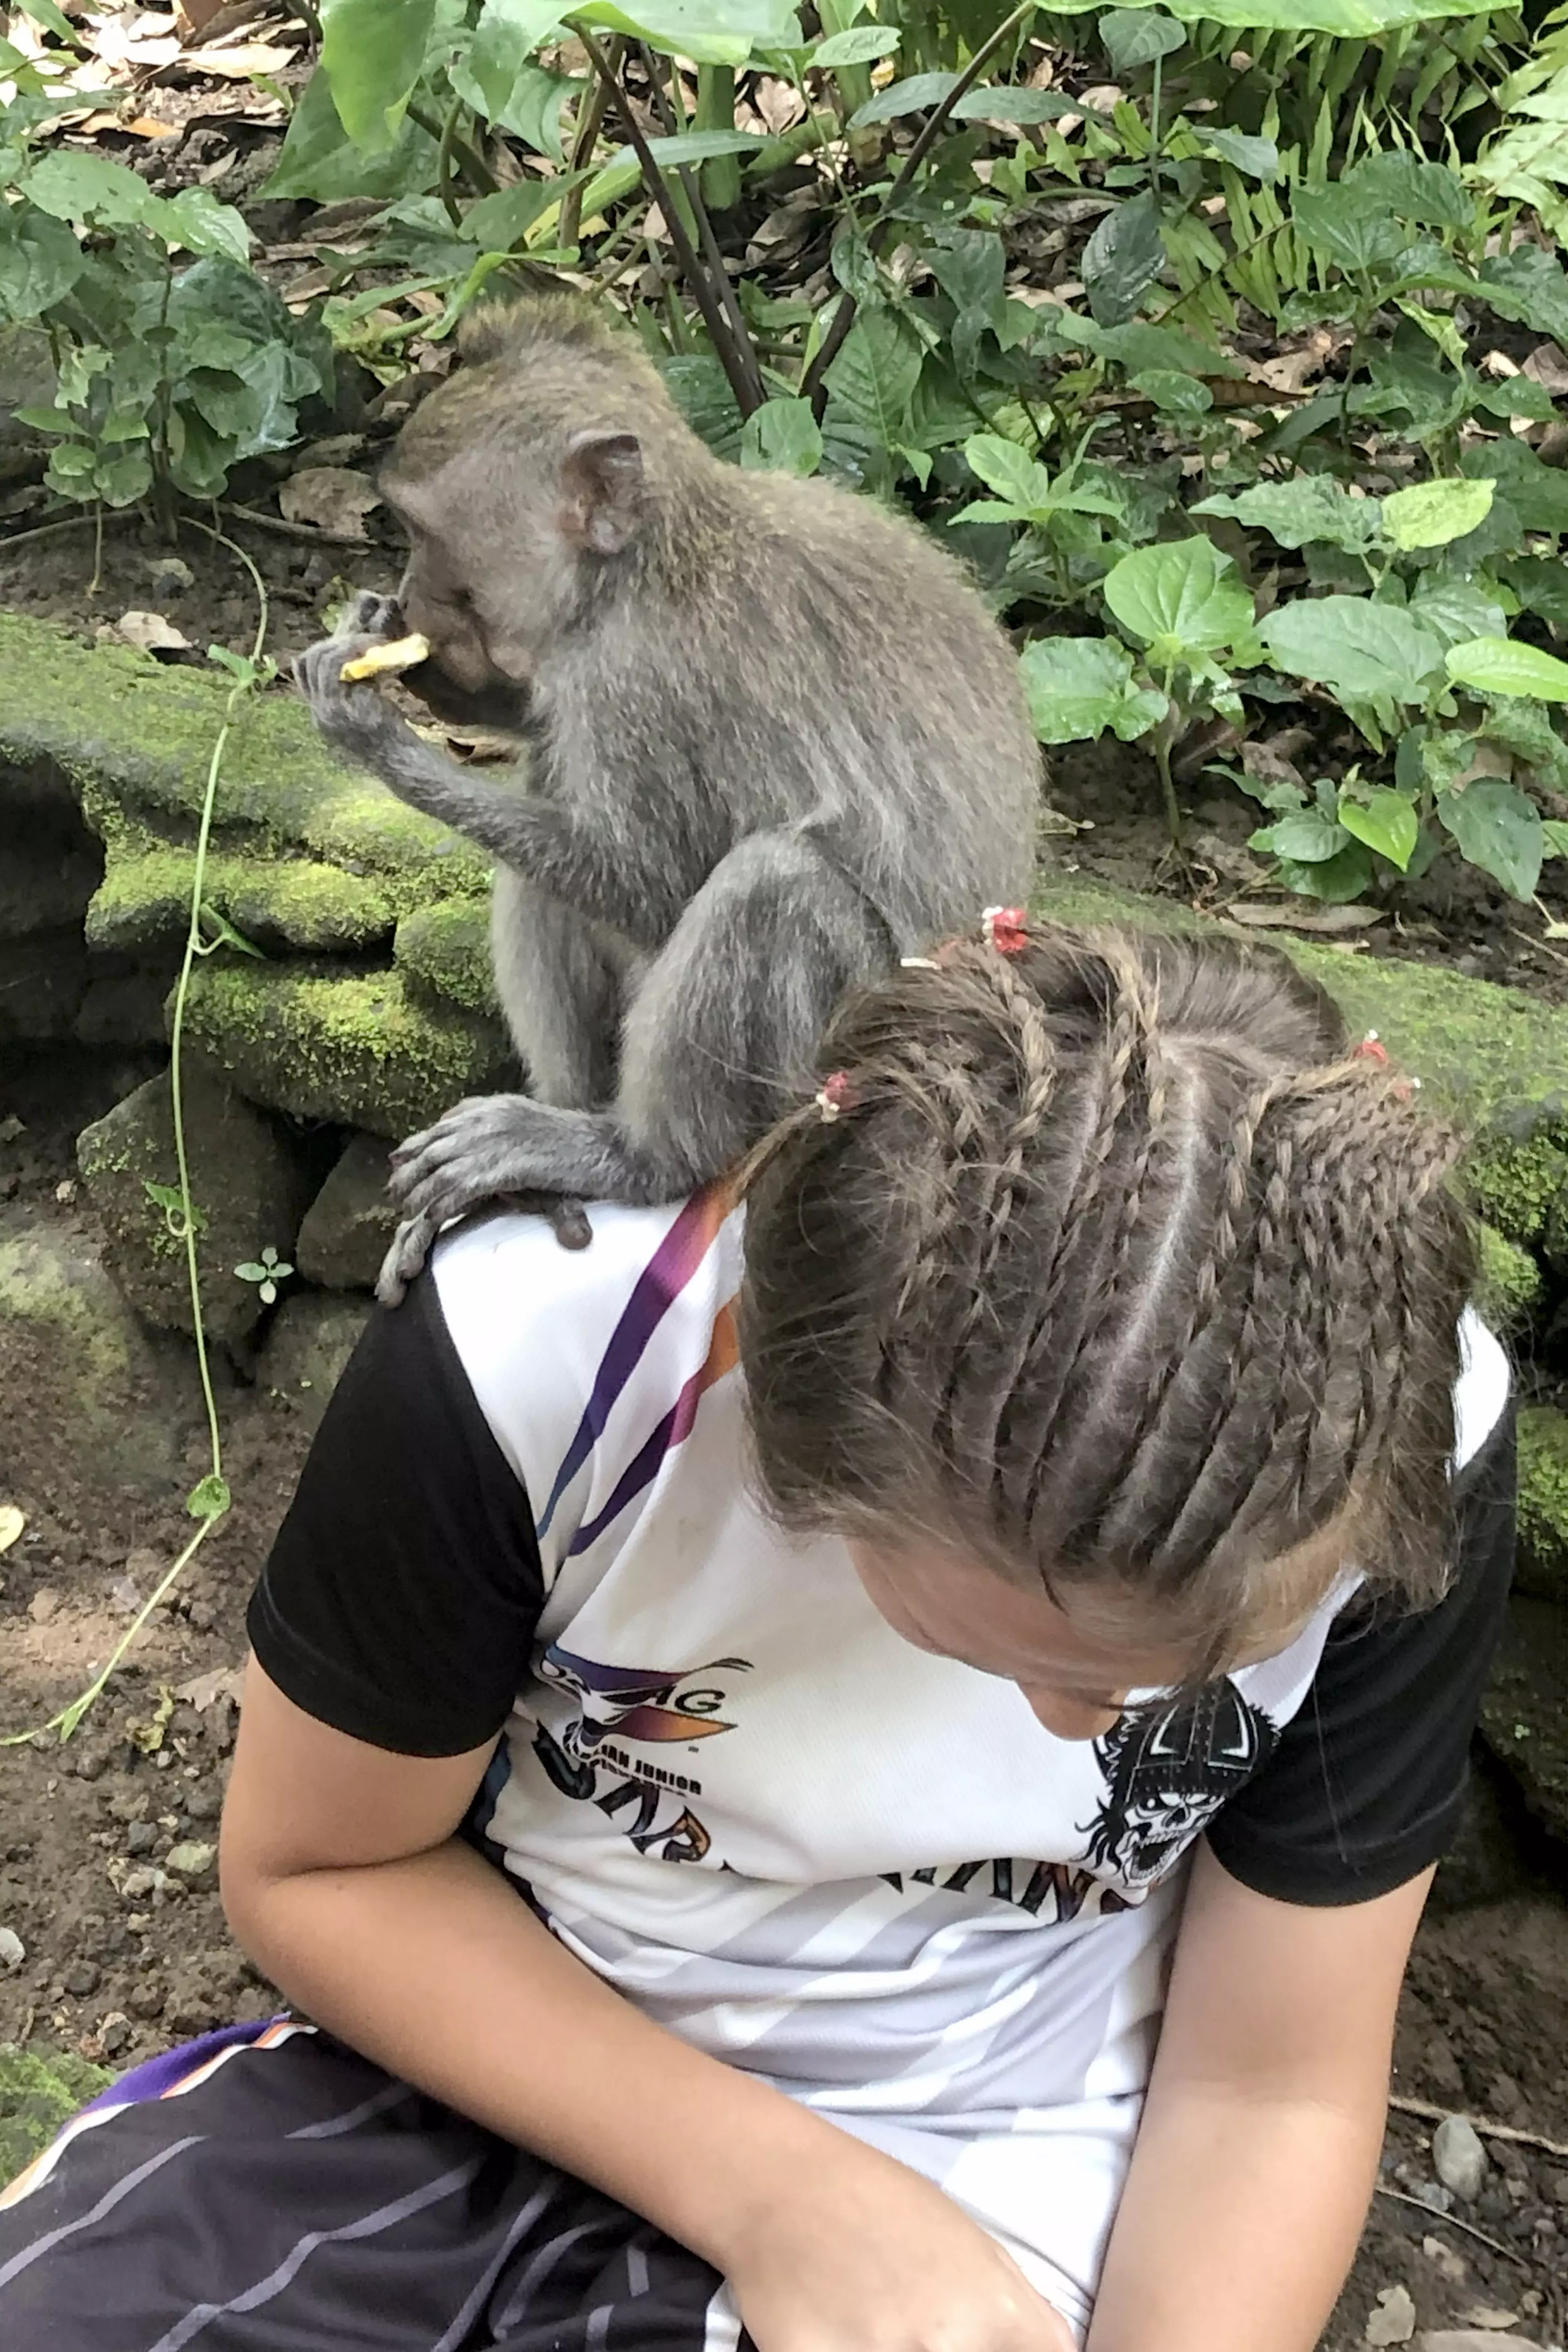 One of the monkeys sitting on Elijah's head.